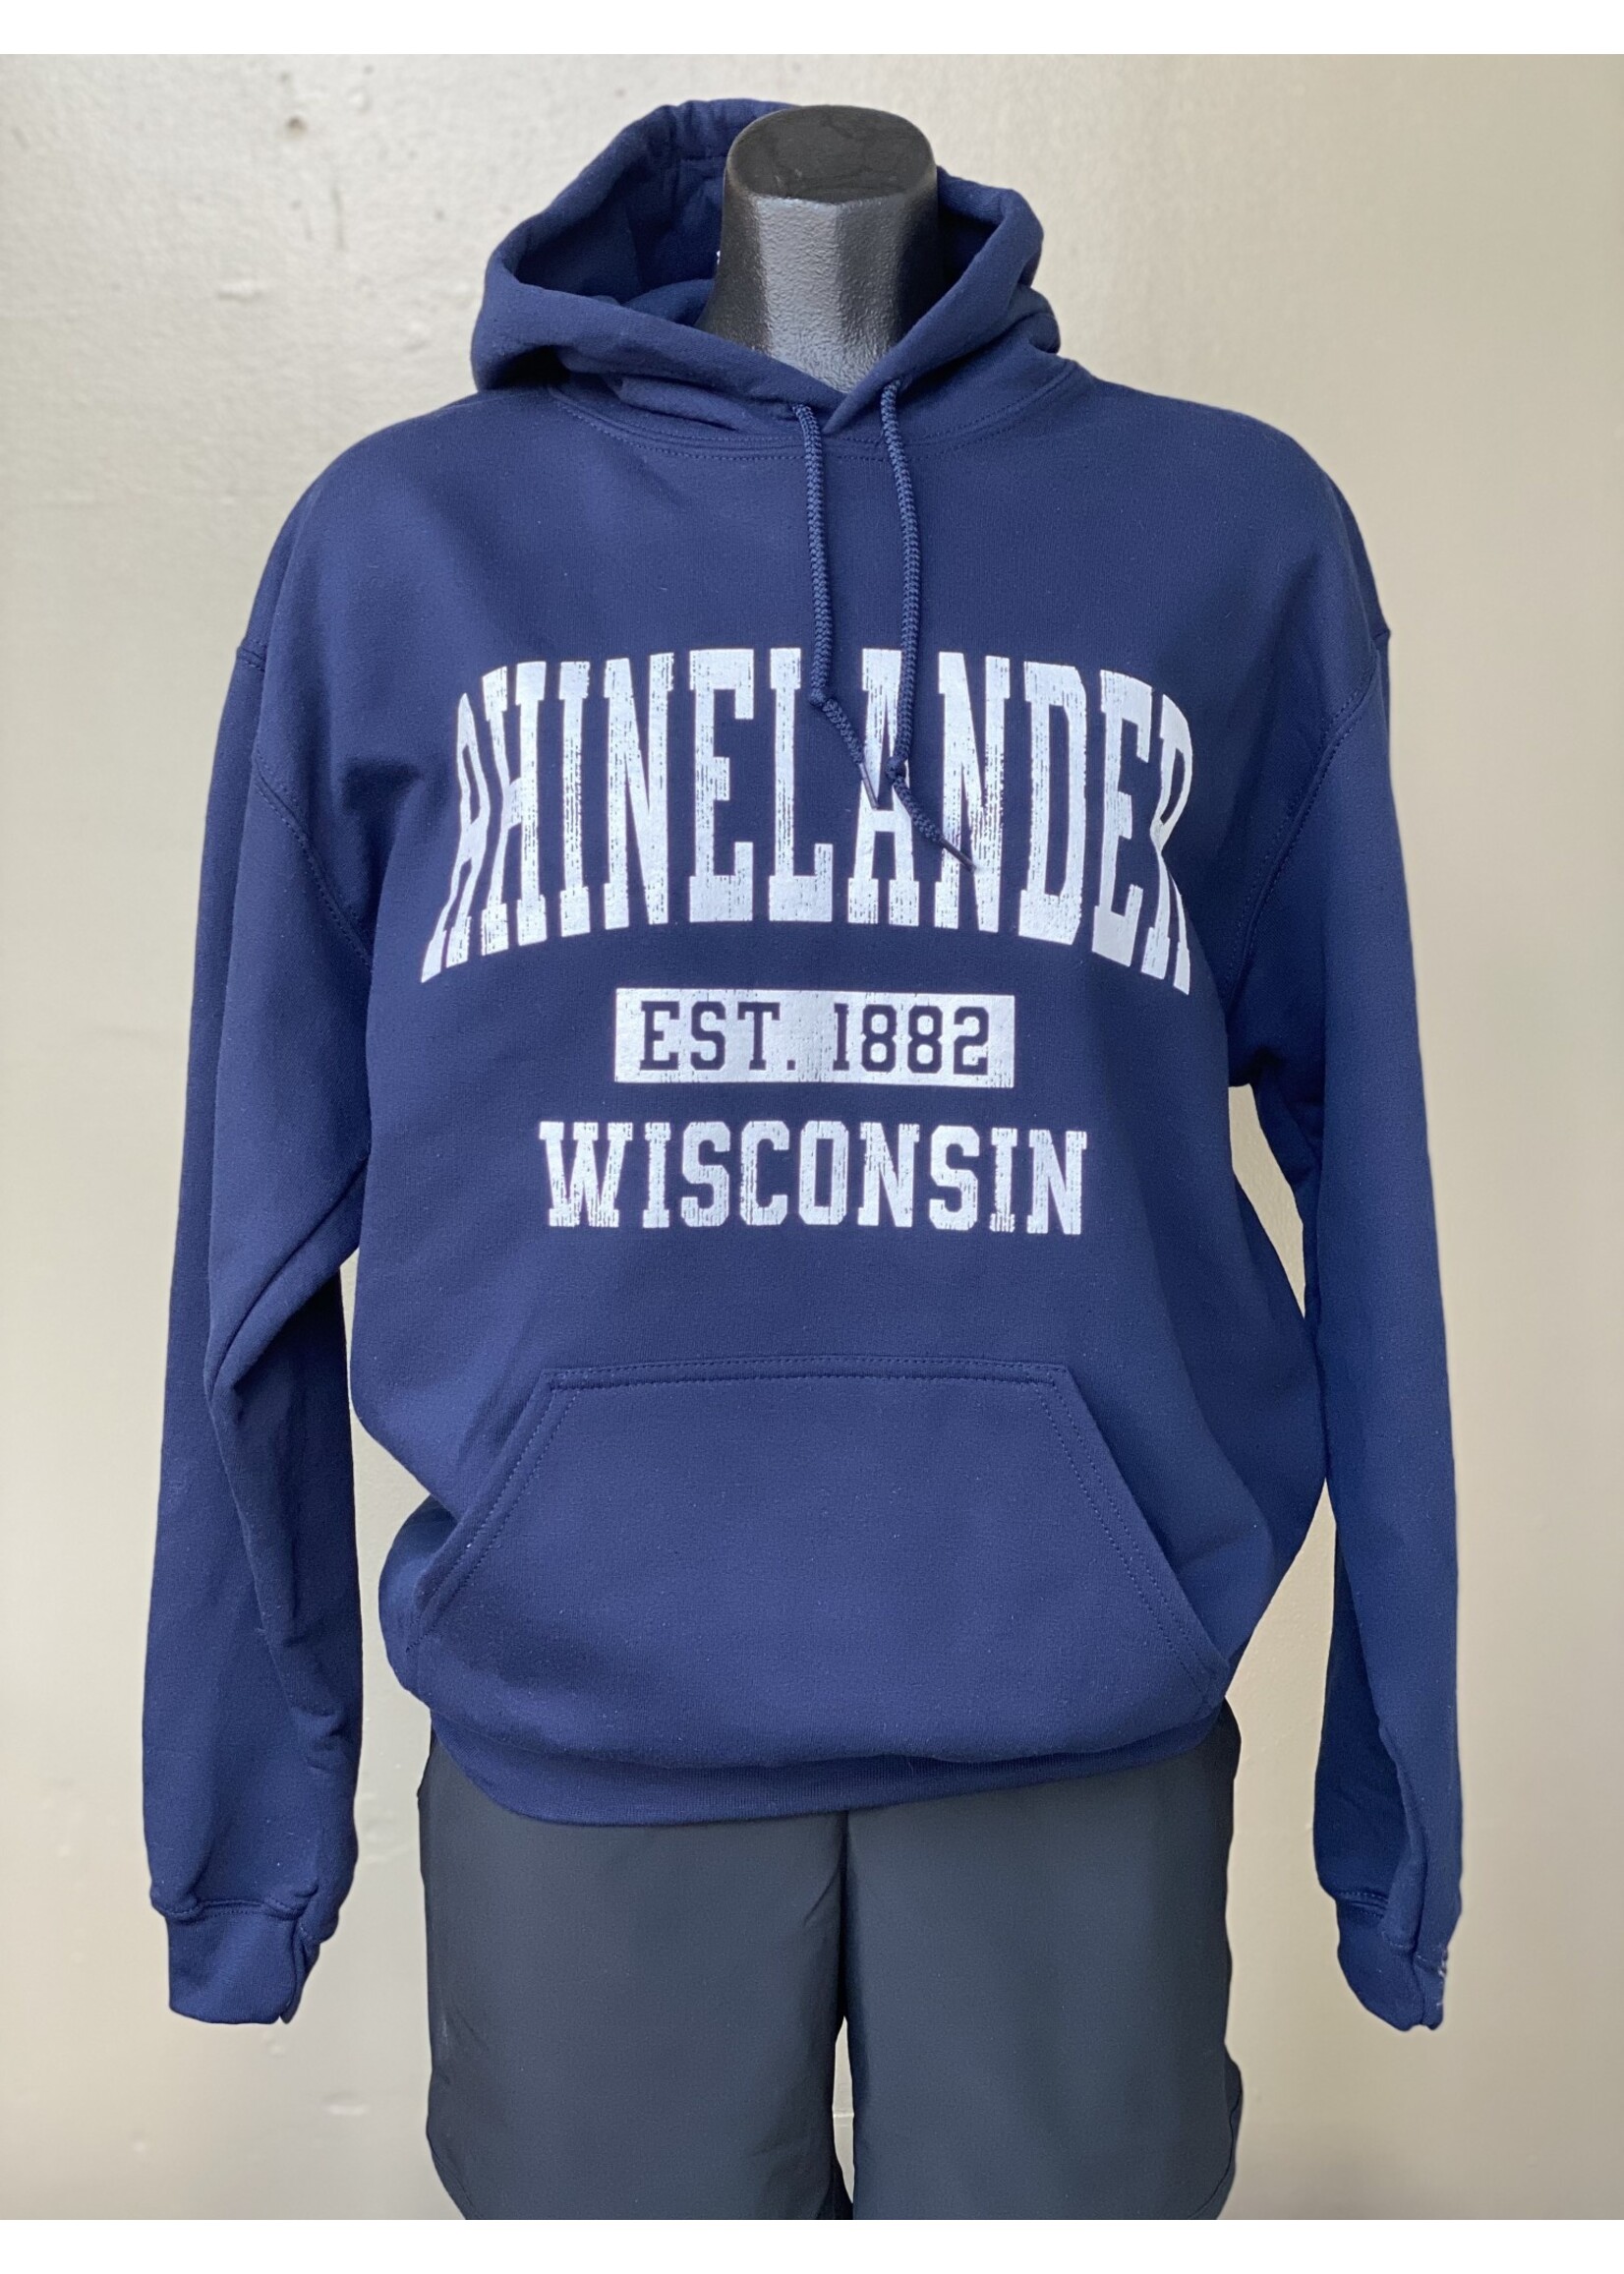 Mel's! Mel's Trading Post Rhinelander Wisconsin Hooded Sweatshirt